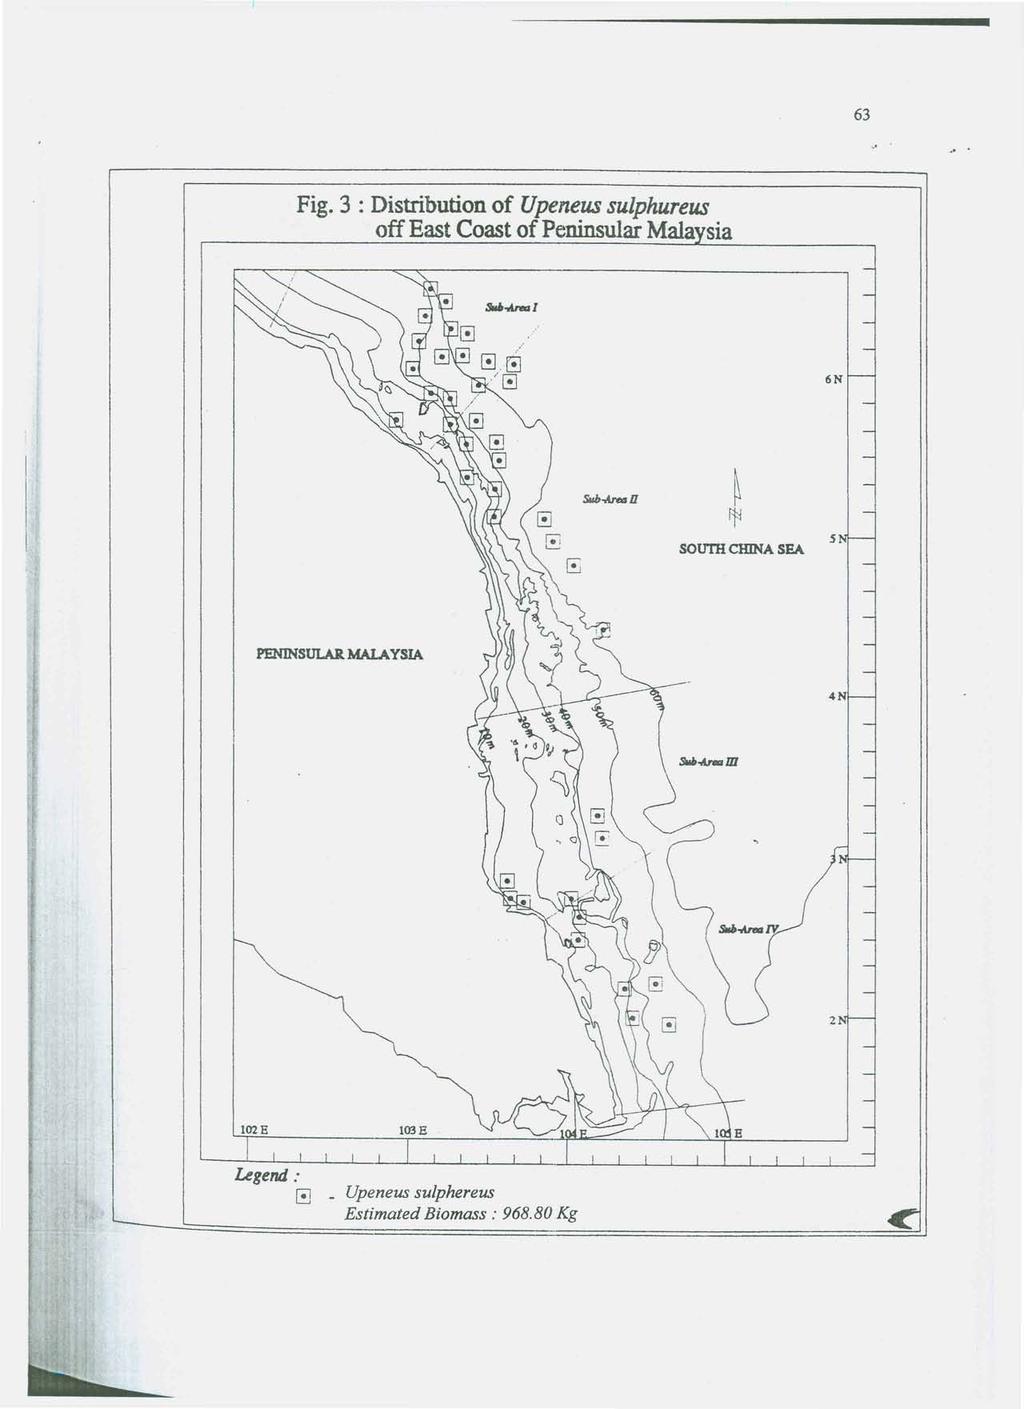 Fig. 3 : Distribution of Upeneus sulphureus off East Coast of